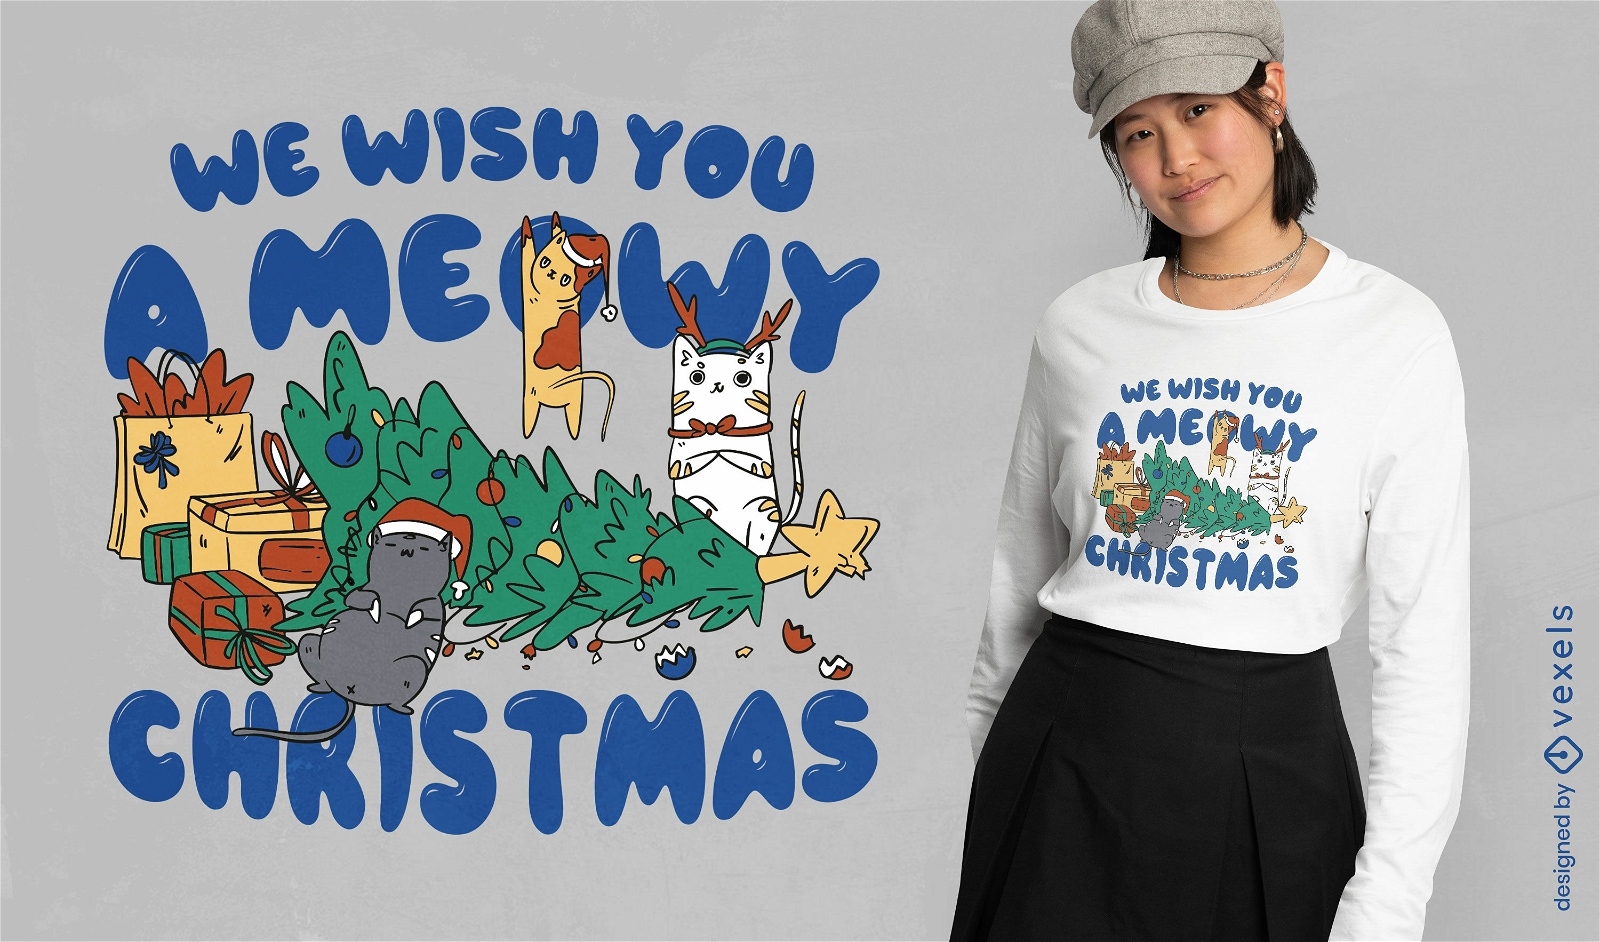 Cat christmas quote t-shirt design